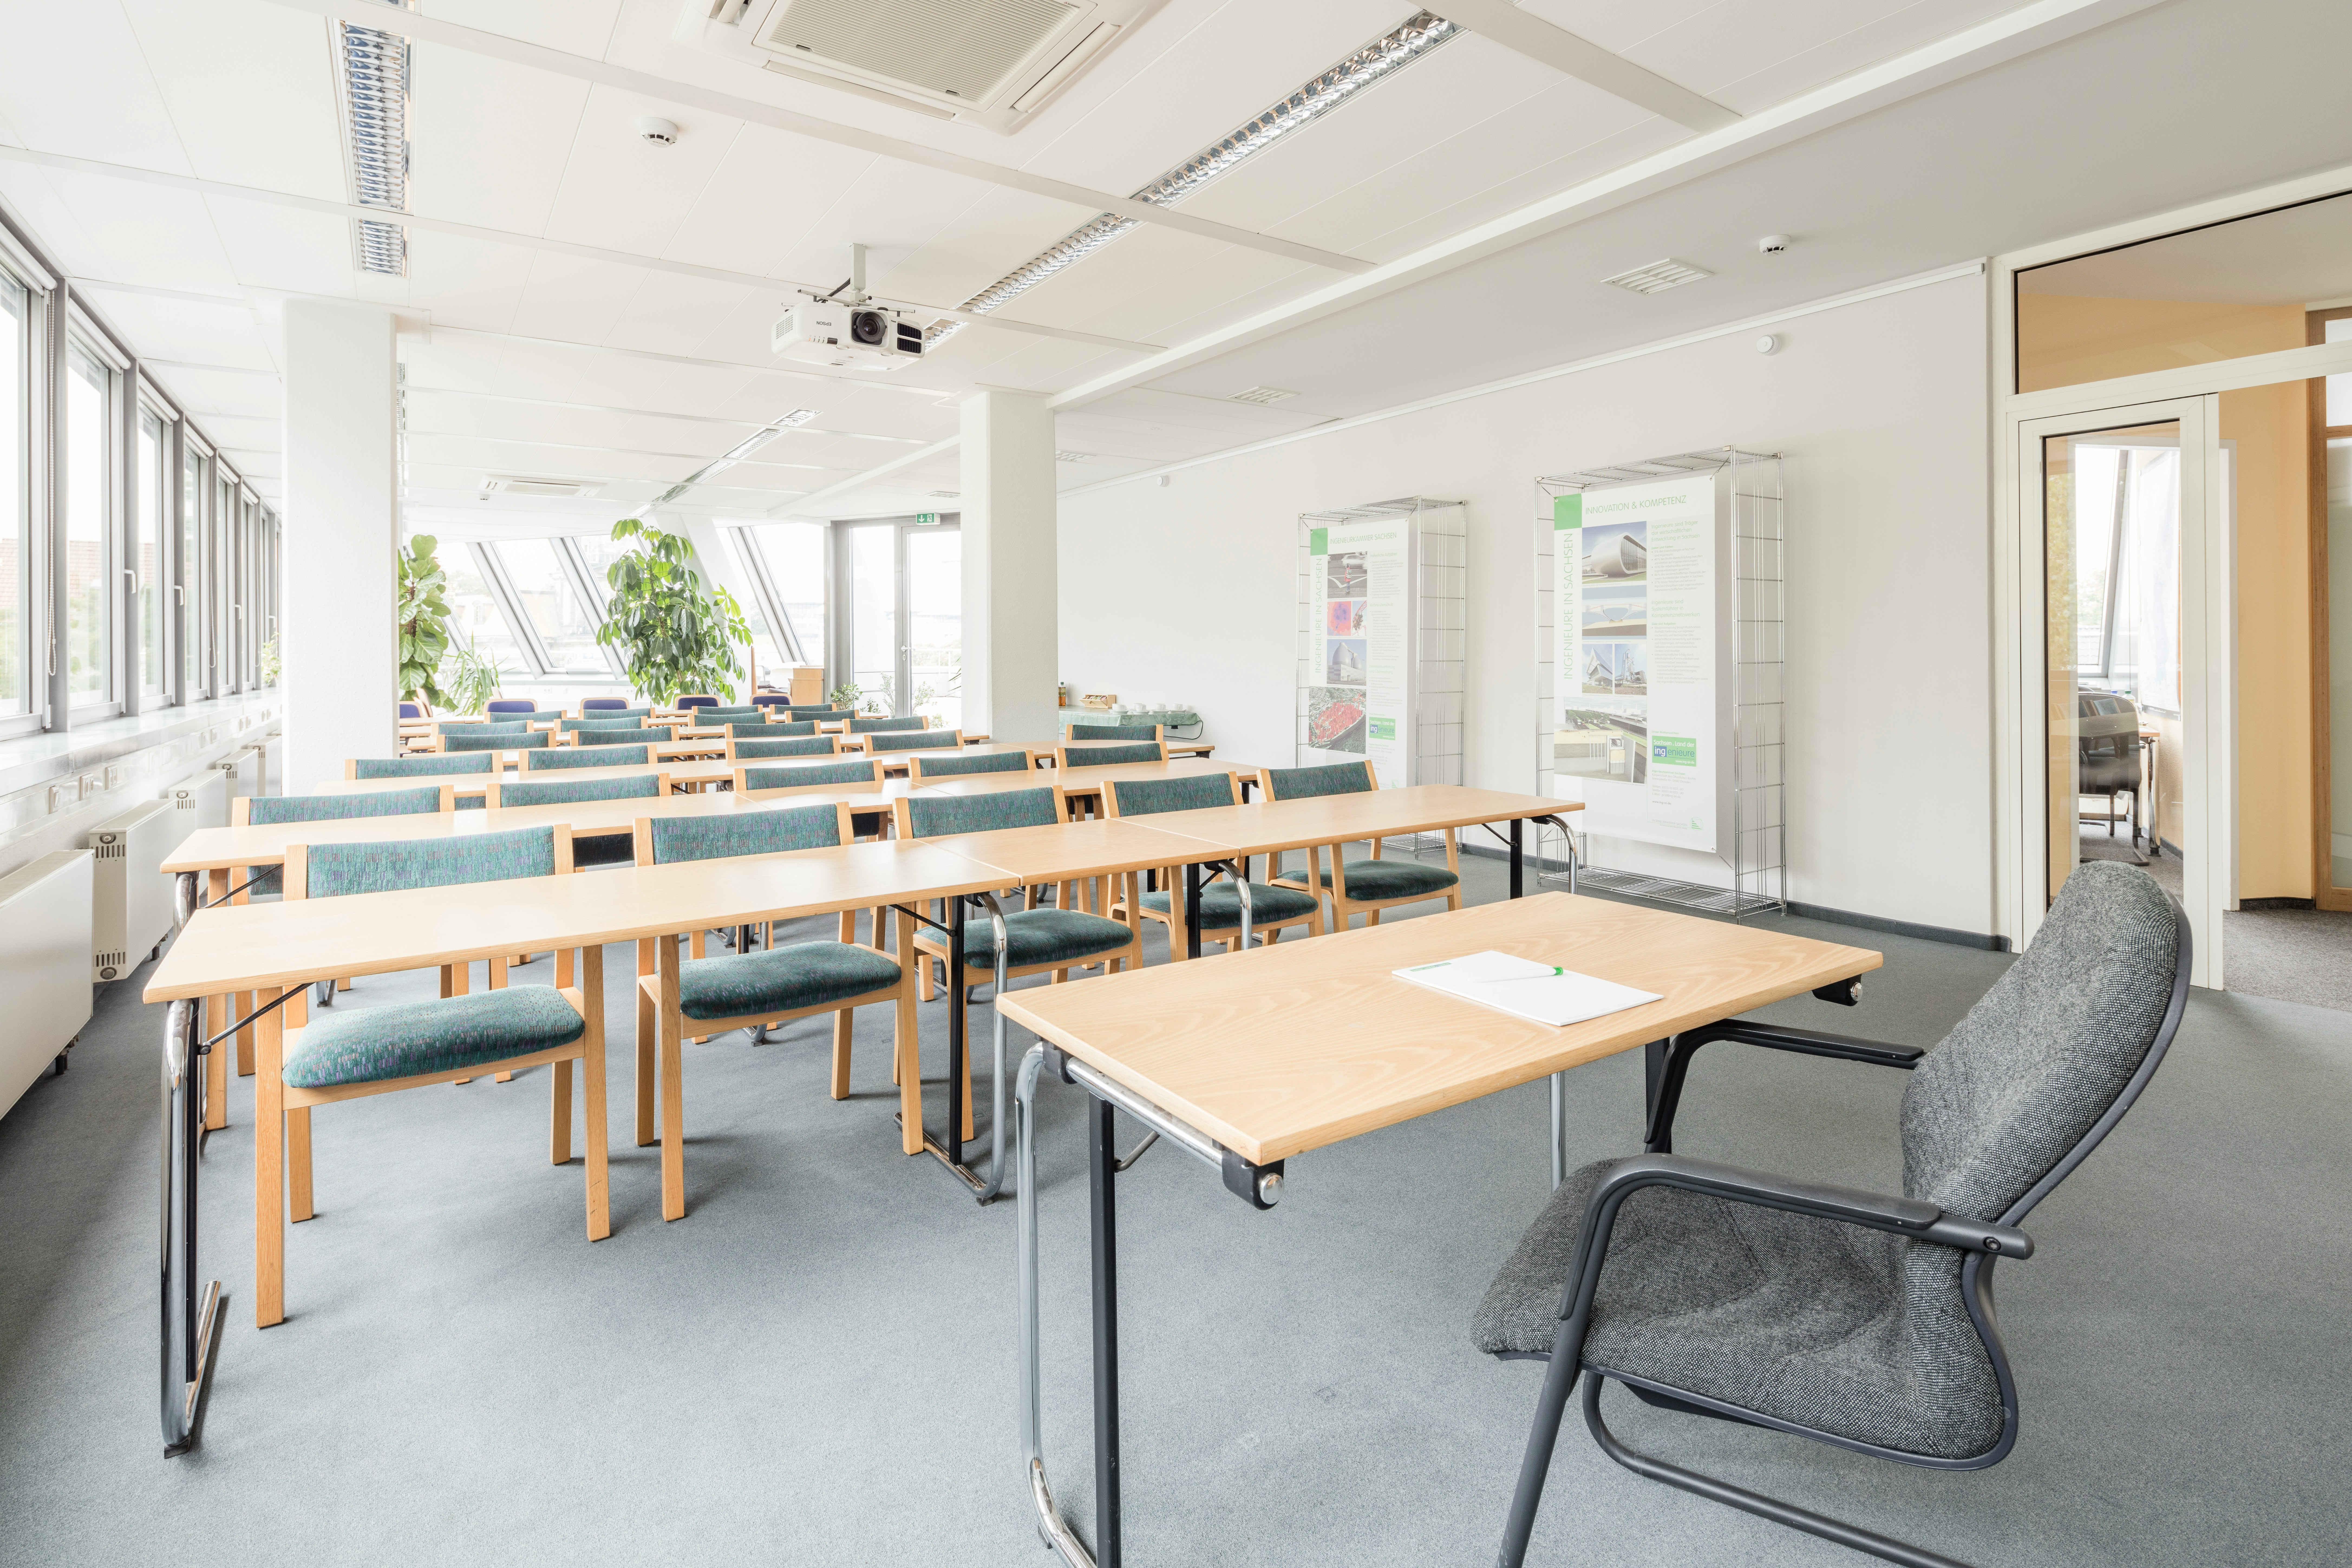 Classroom with empty desks